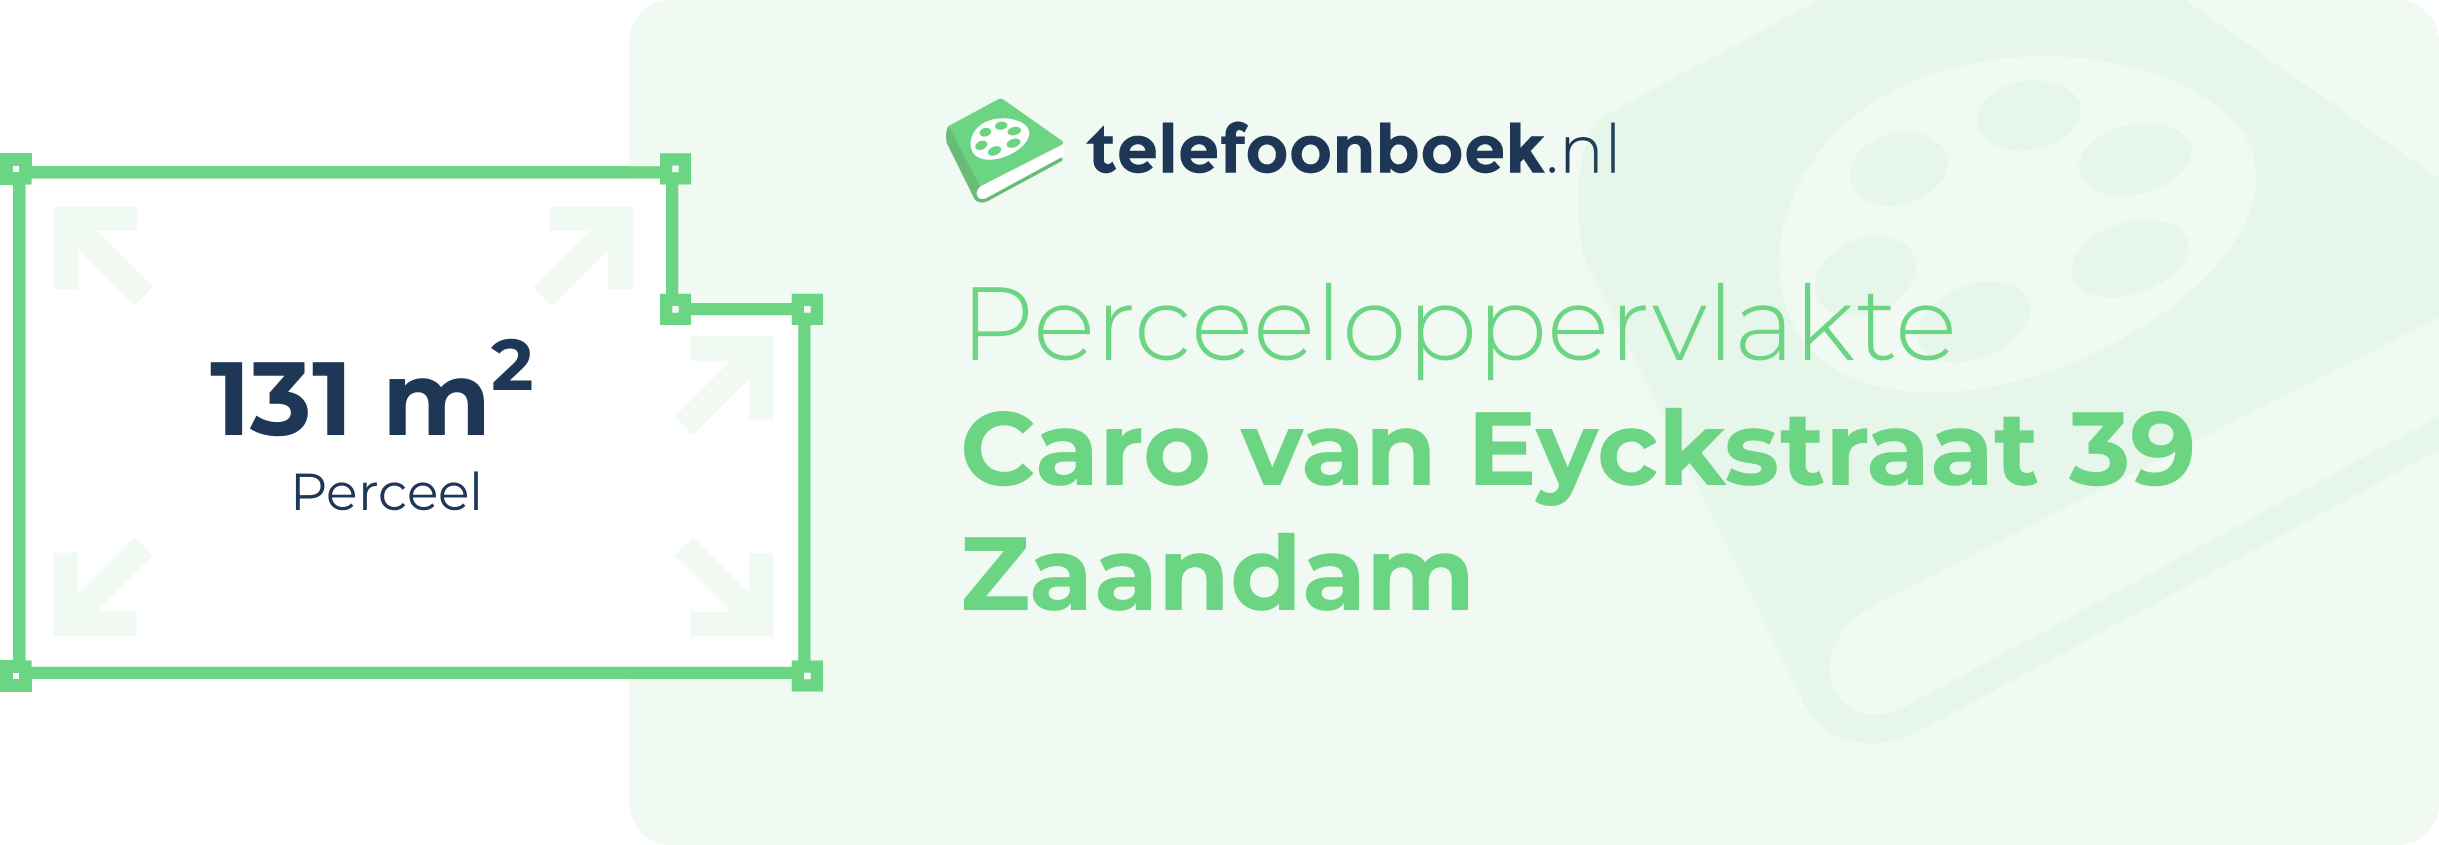 Perceeloppervlakte Caro Van Eyckstraat 39 Zaandam